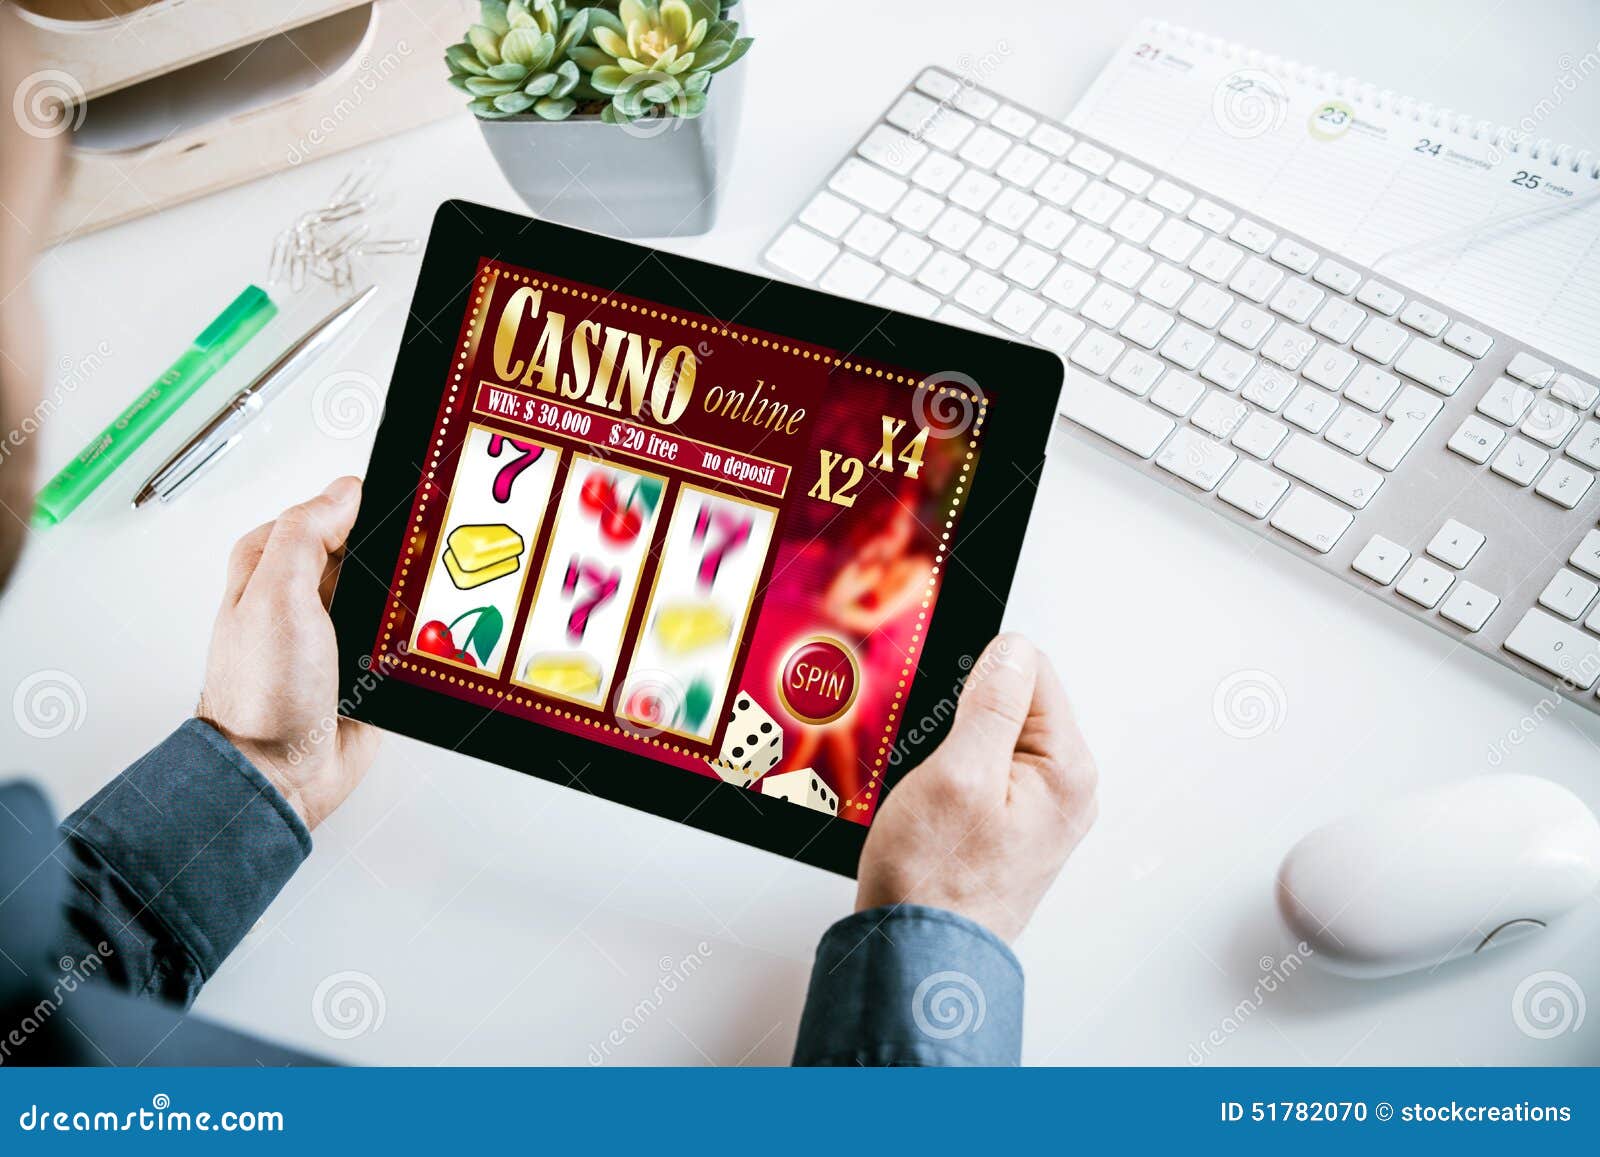 online-casino-gambling-interface-tablet-